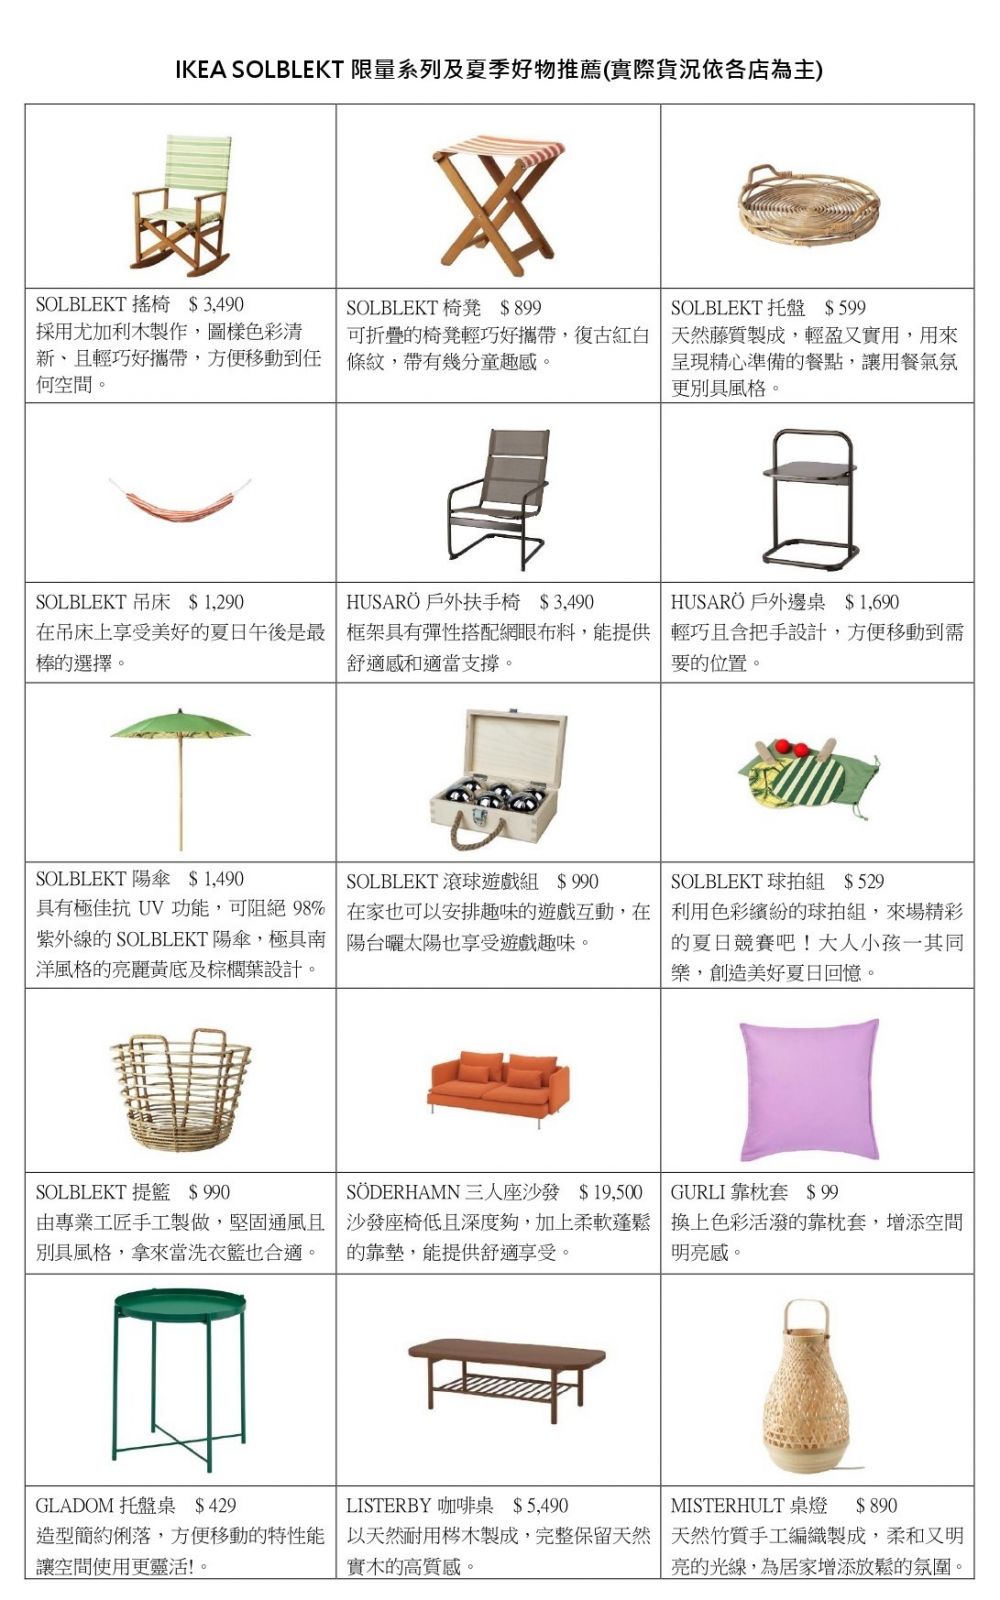 【IKEA 宜家家居新聞稿】時尚X復古 IKEA SOLBLEKT限量系列新上市_page-0001 (1).jpg